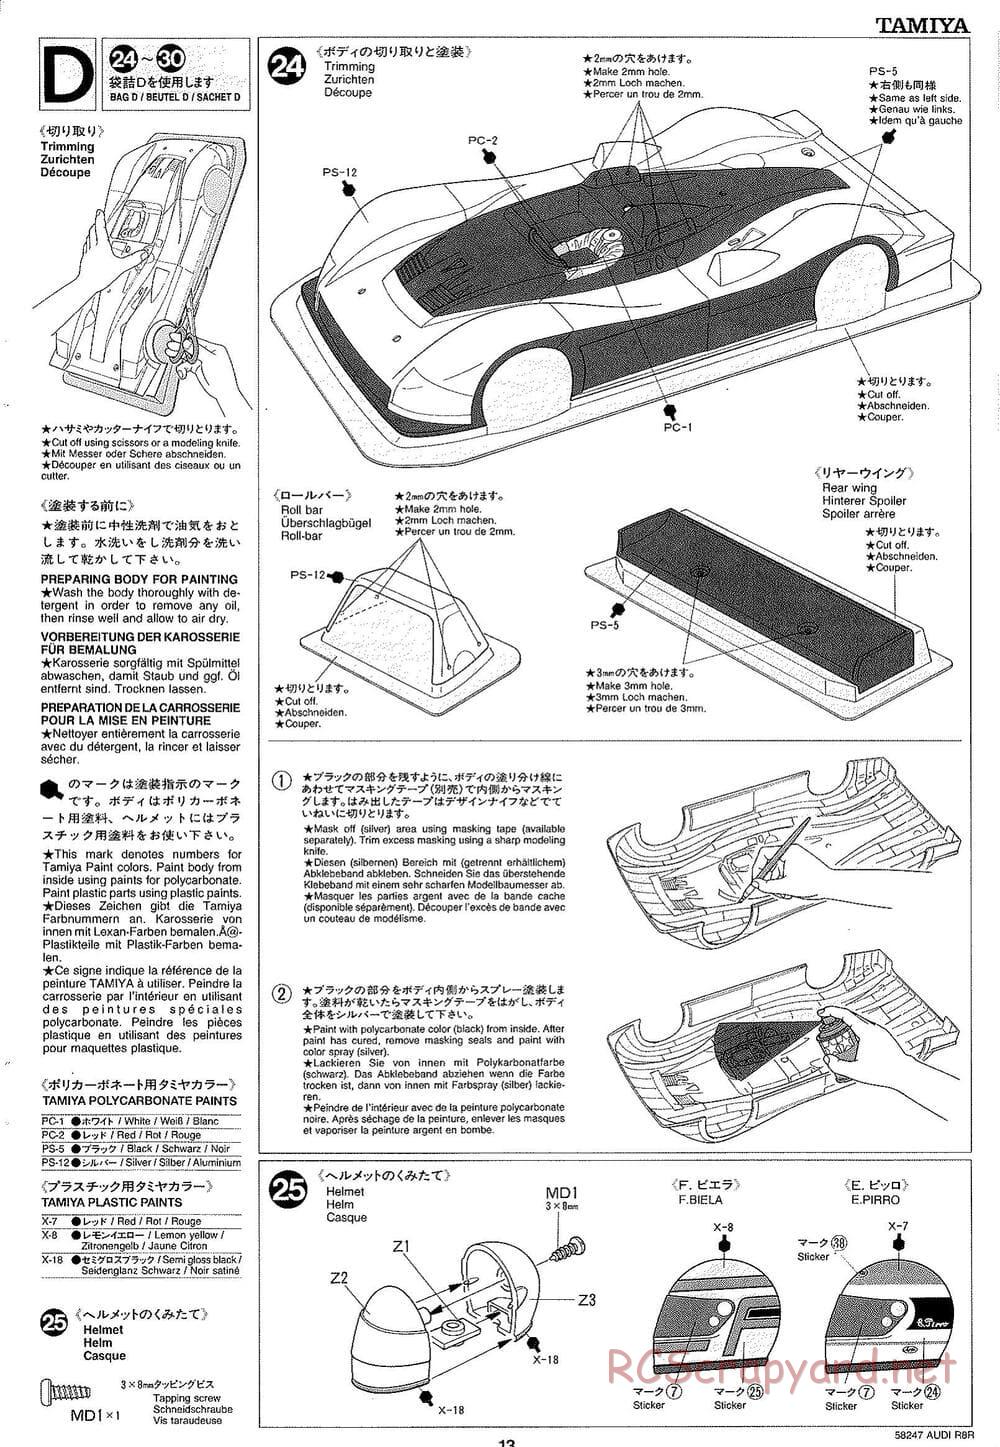 Tamiya - Audi R8R - F103LM Chassis - Manual - Page 13